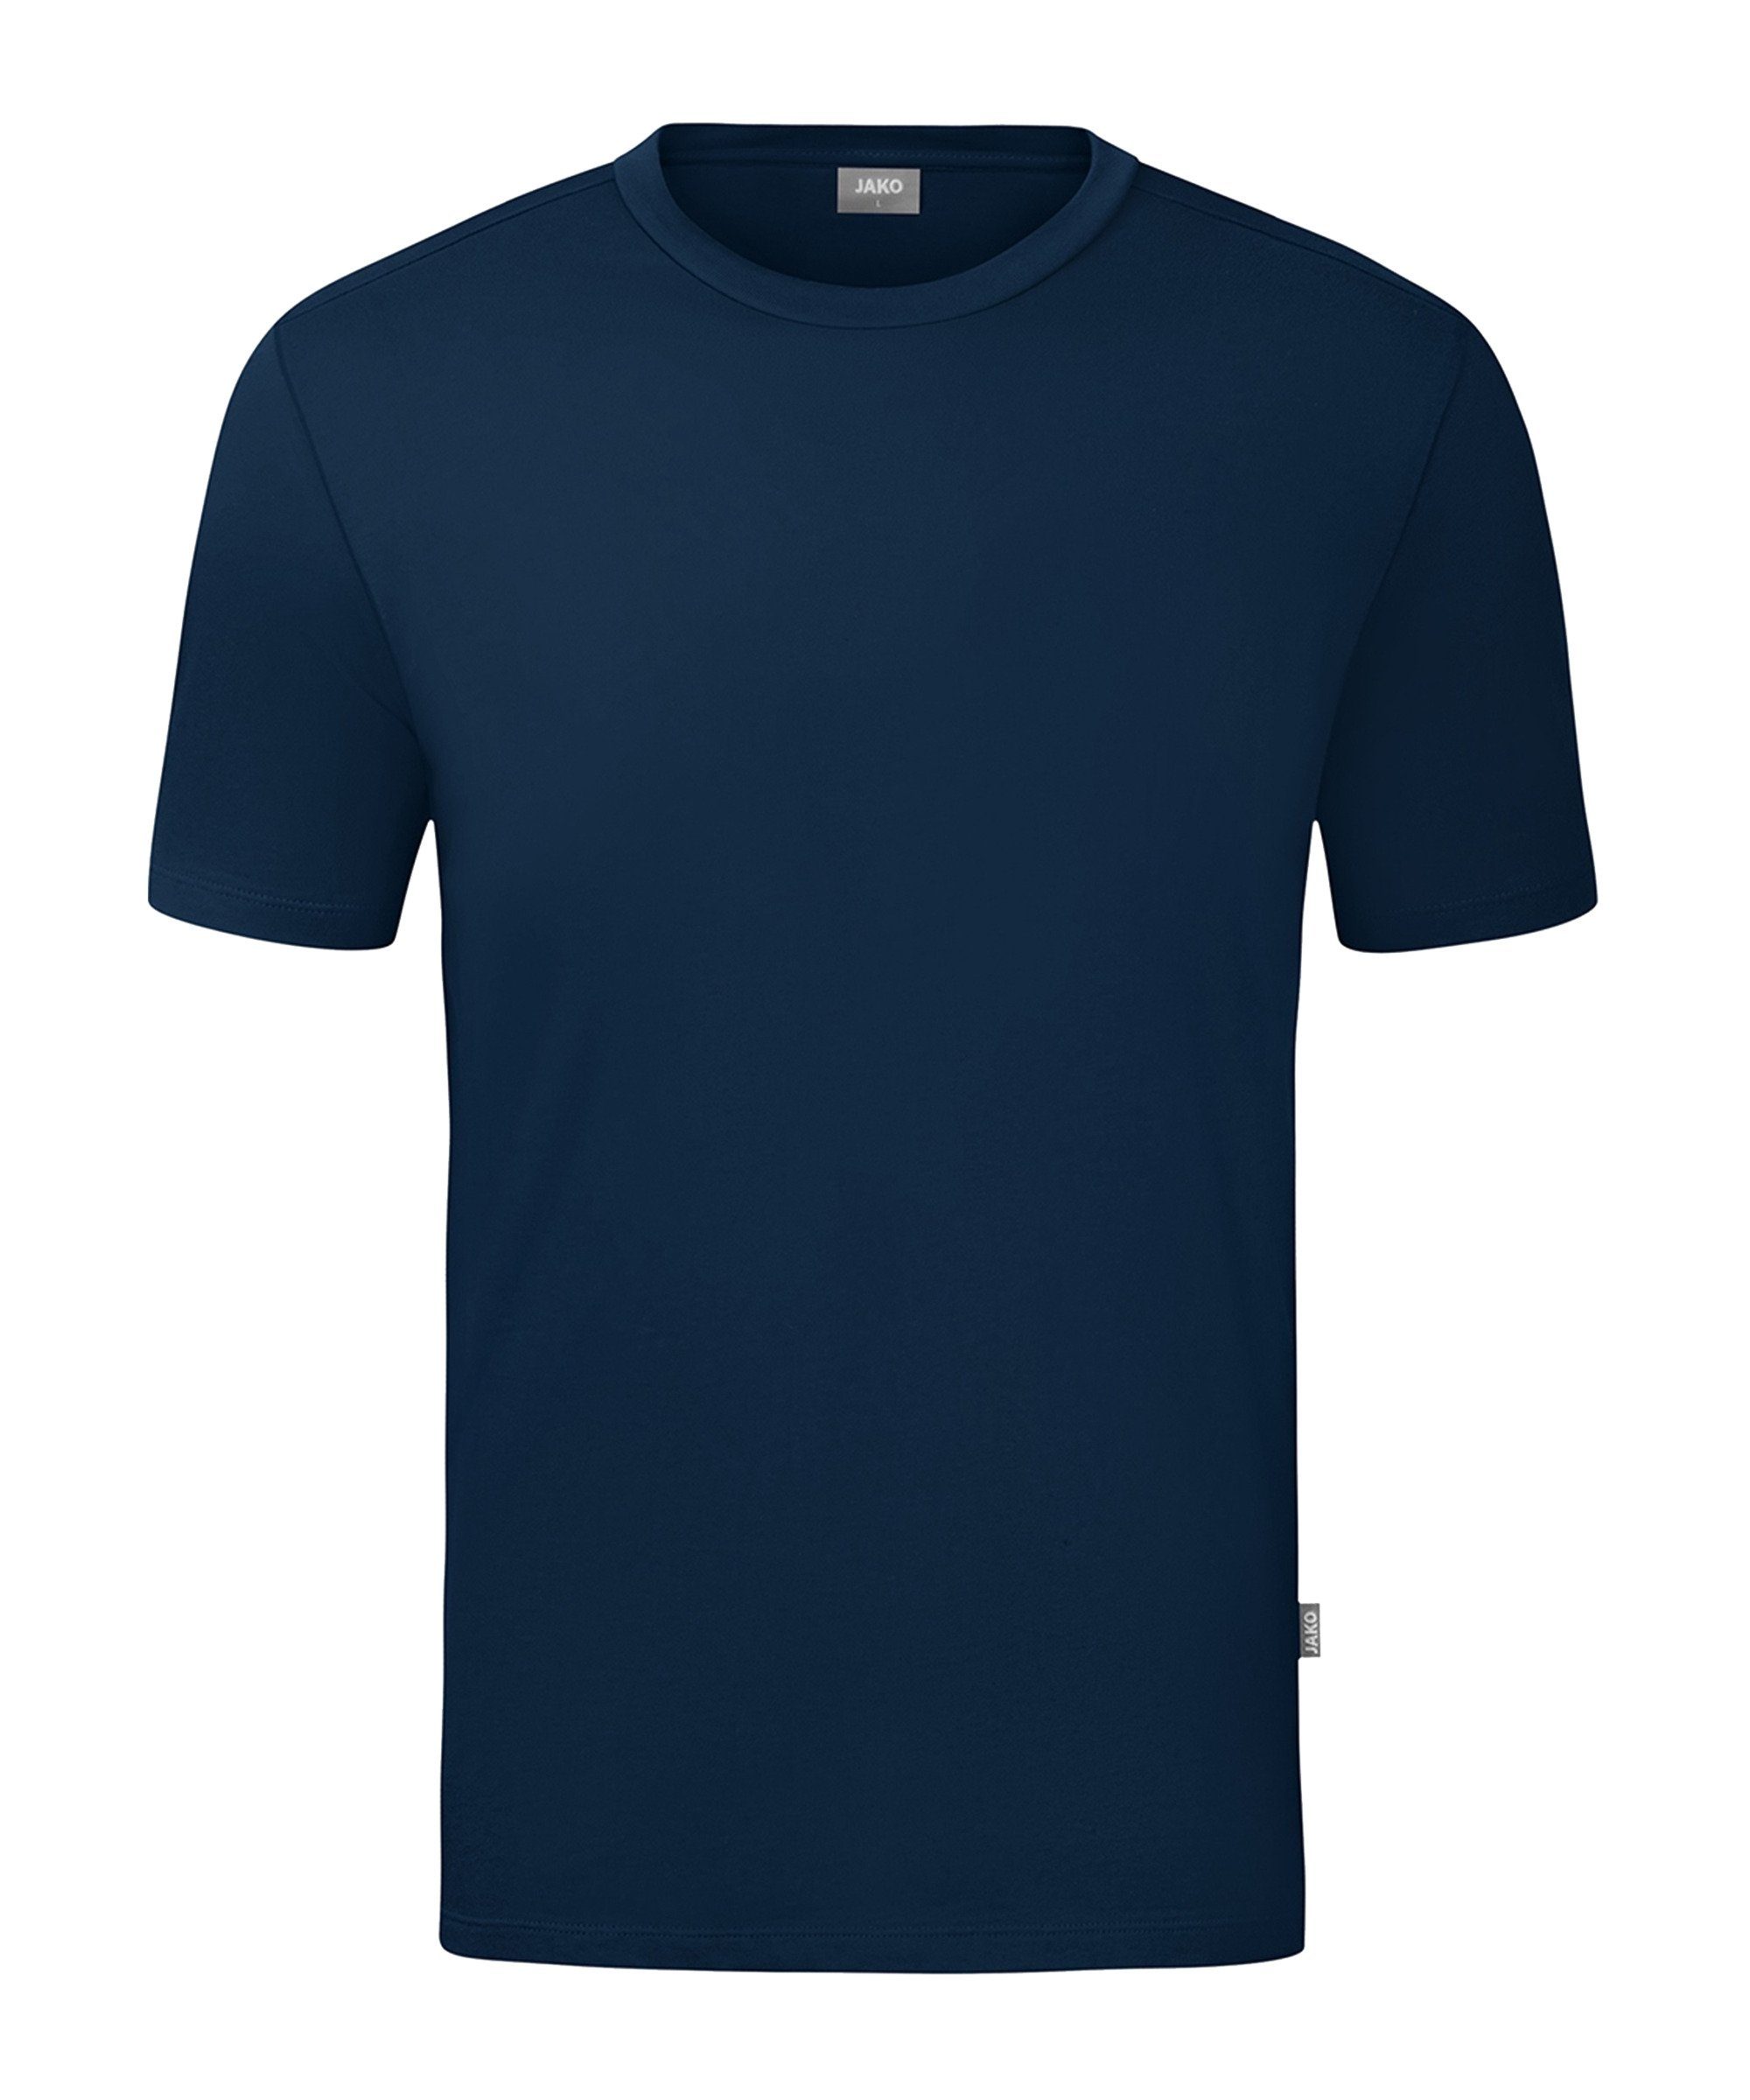 Jako T-Shirt Organic T-Shirt default blaublaubeige